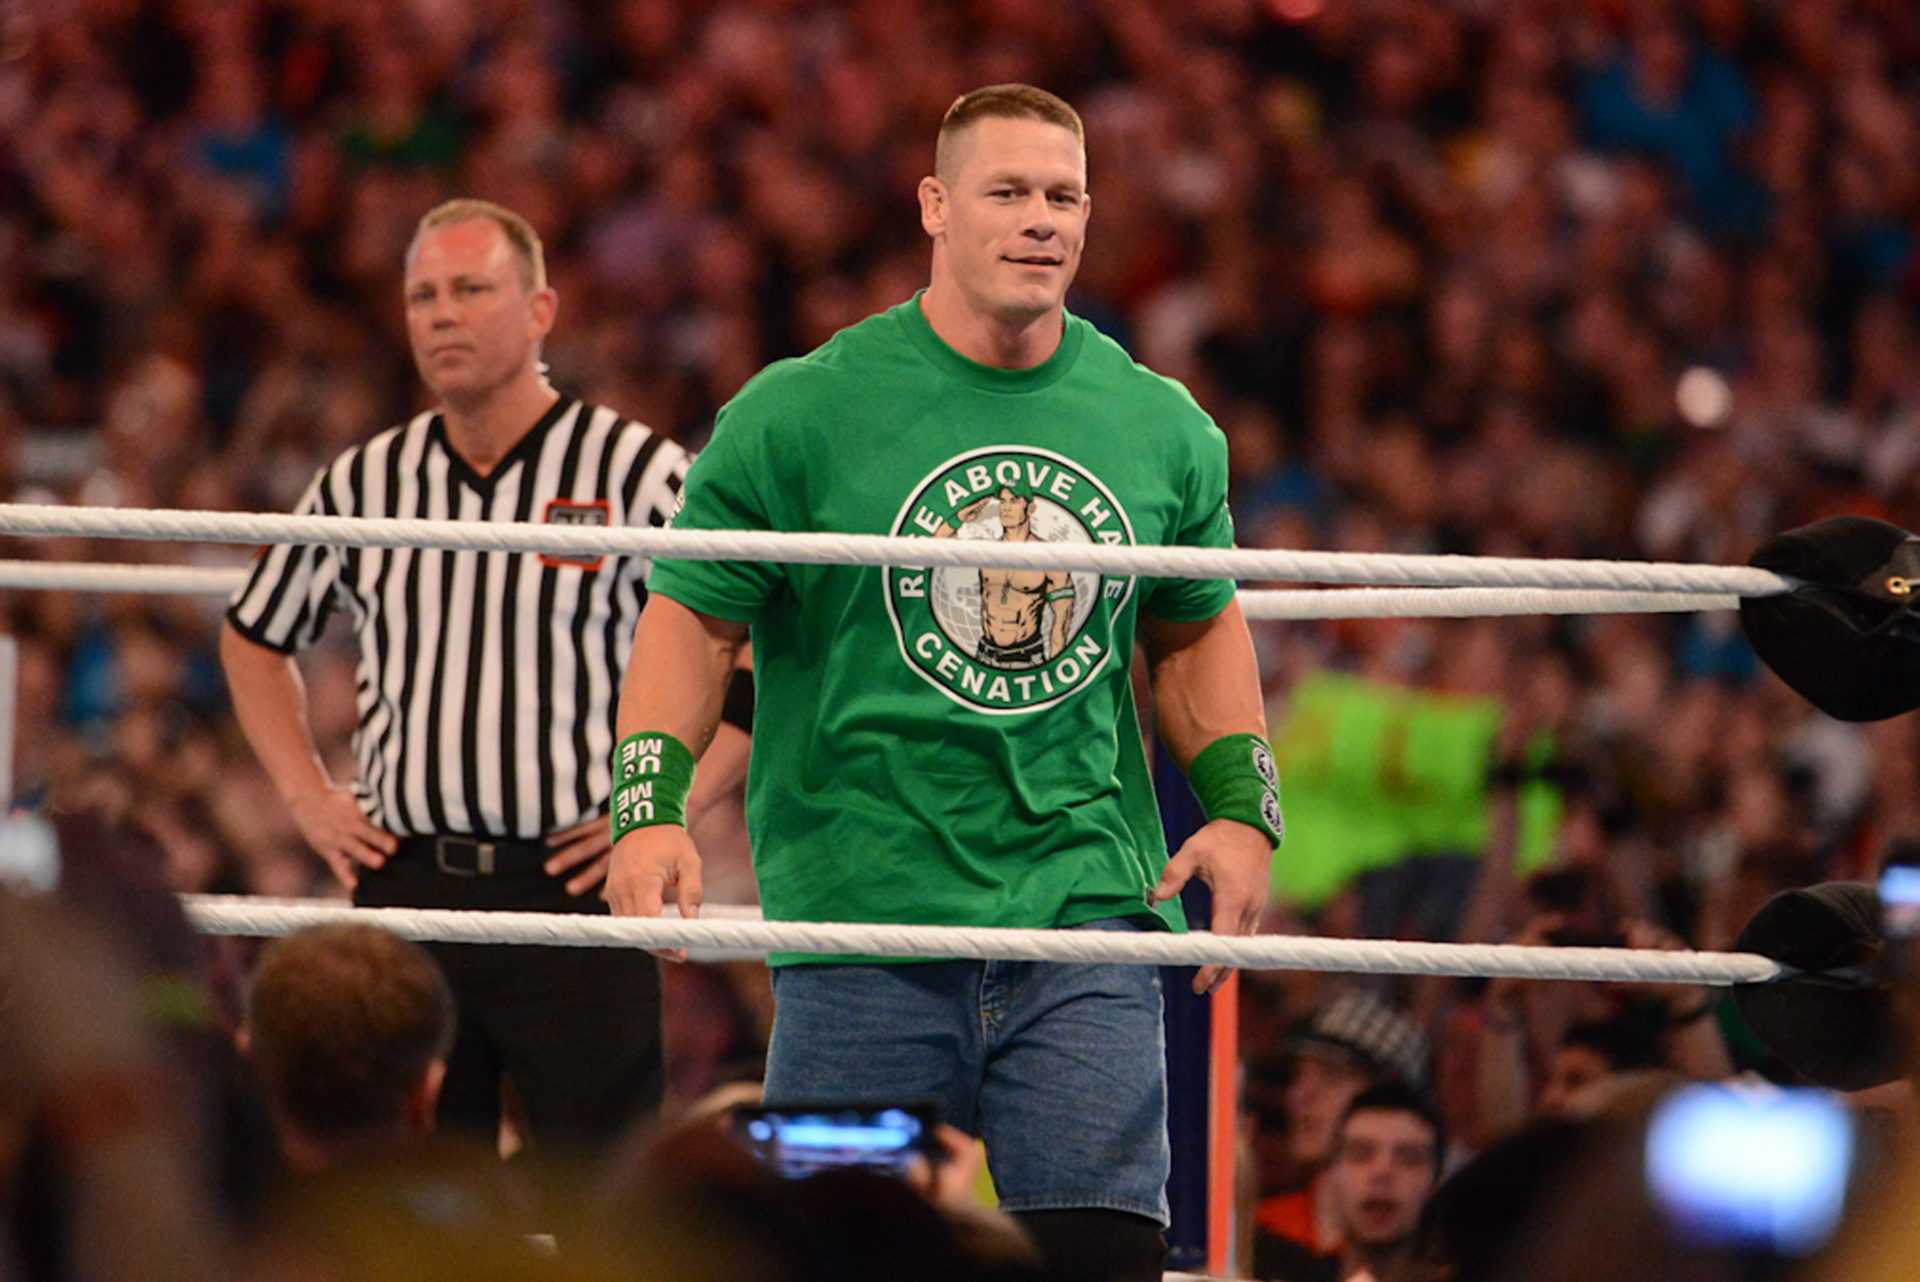 Chambre d'élimination John Cena